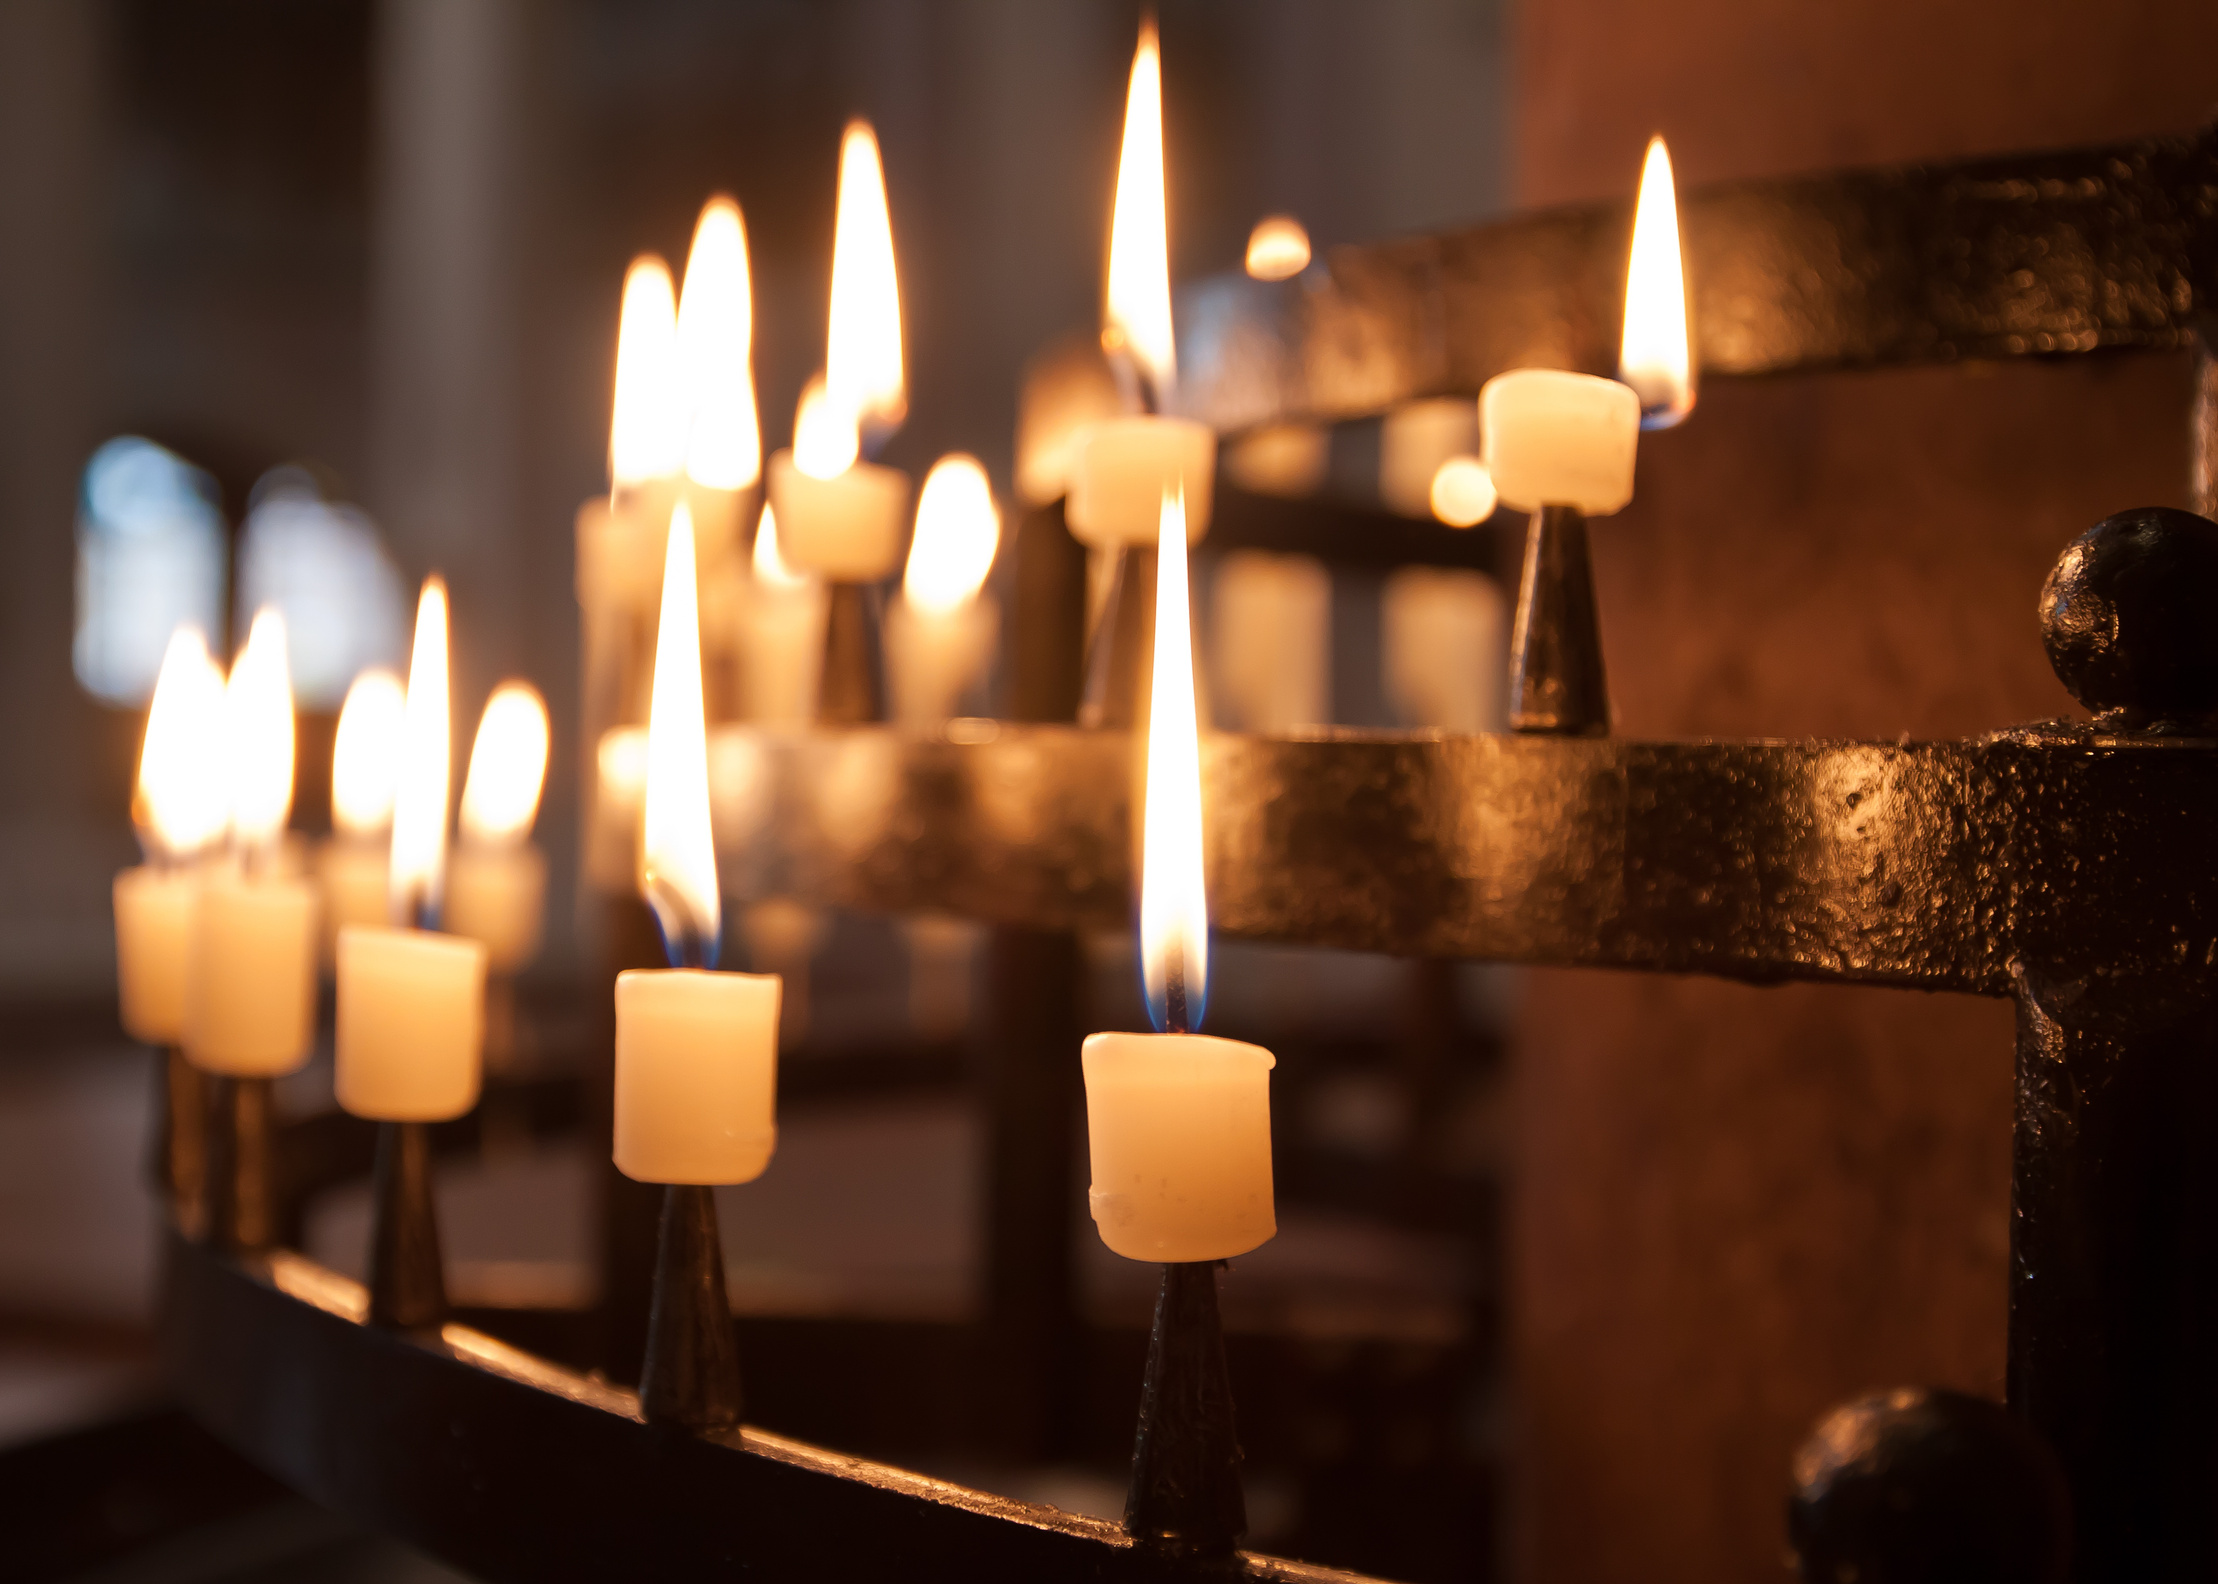 Lit Candles at a Church